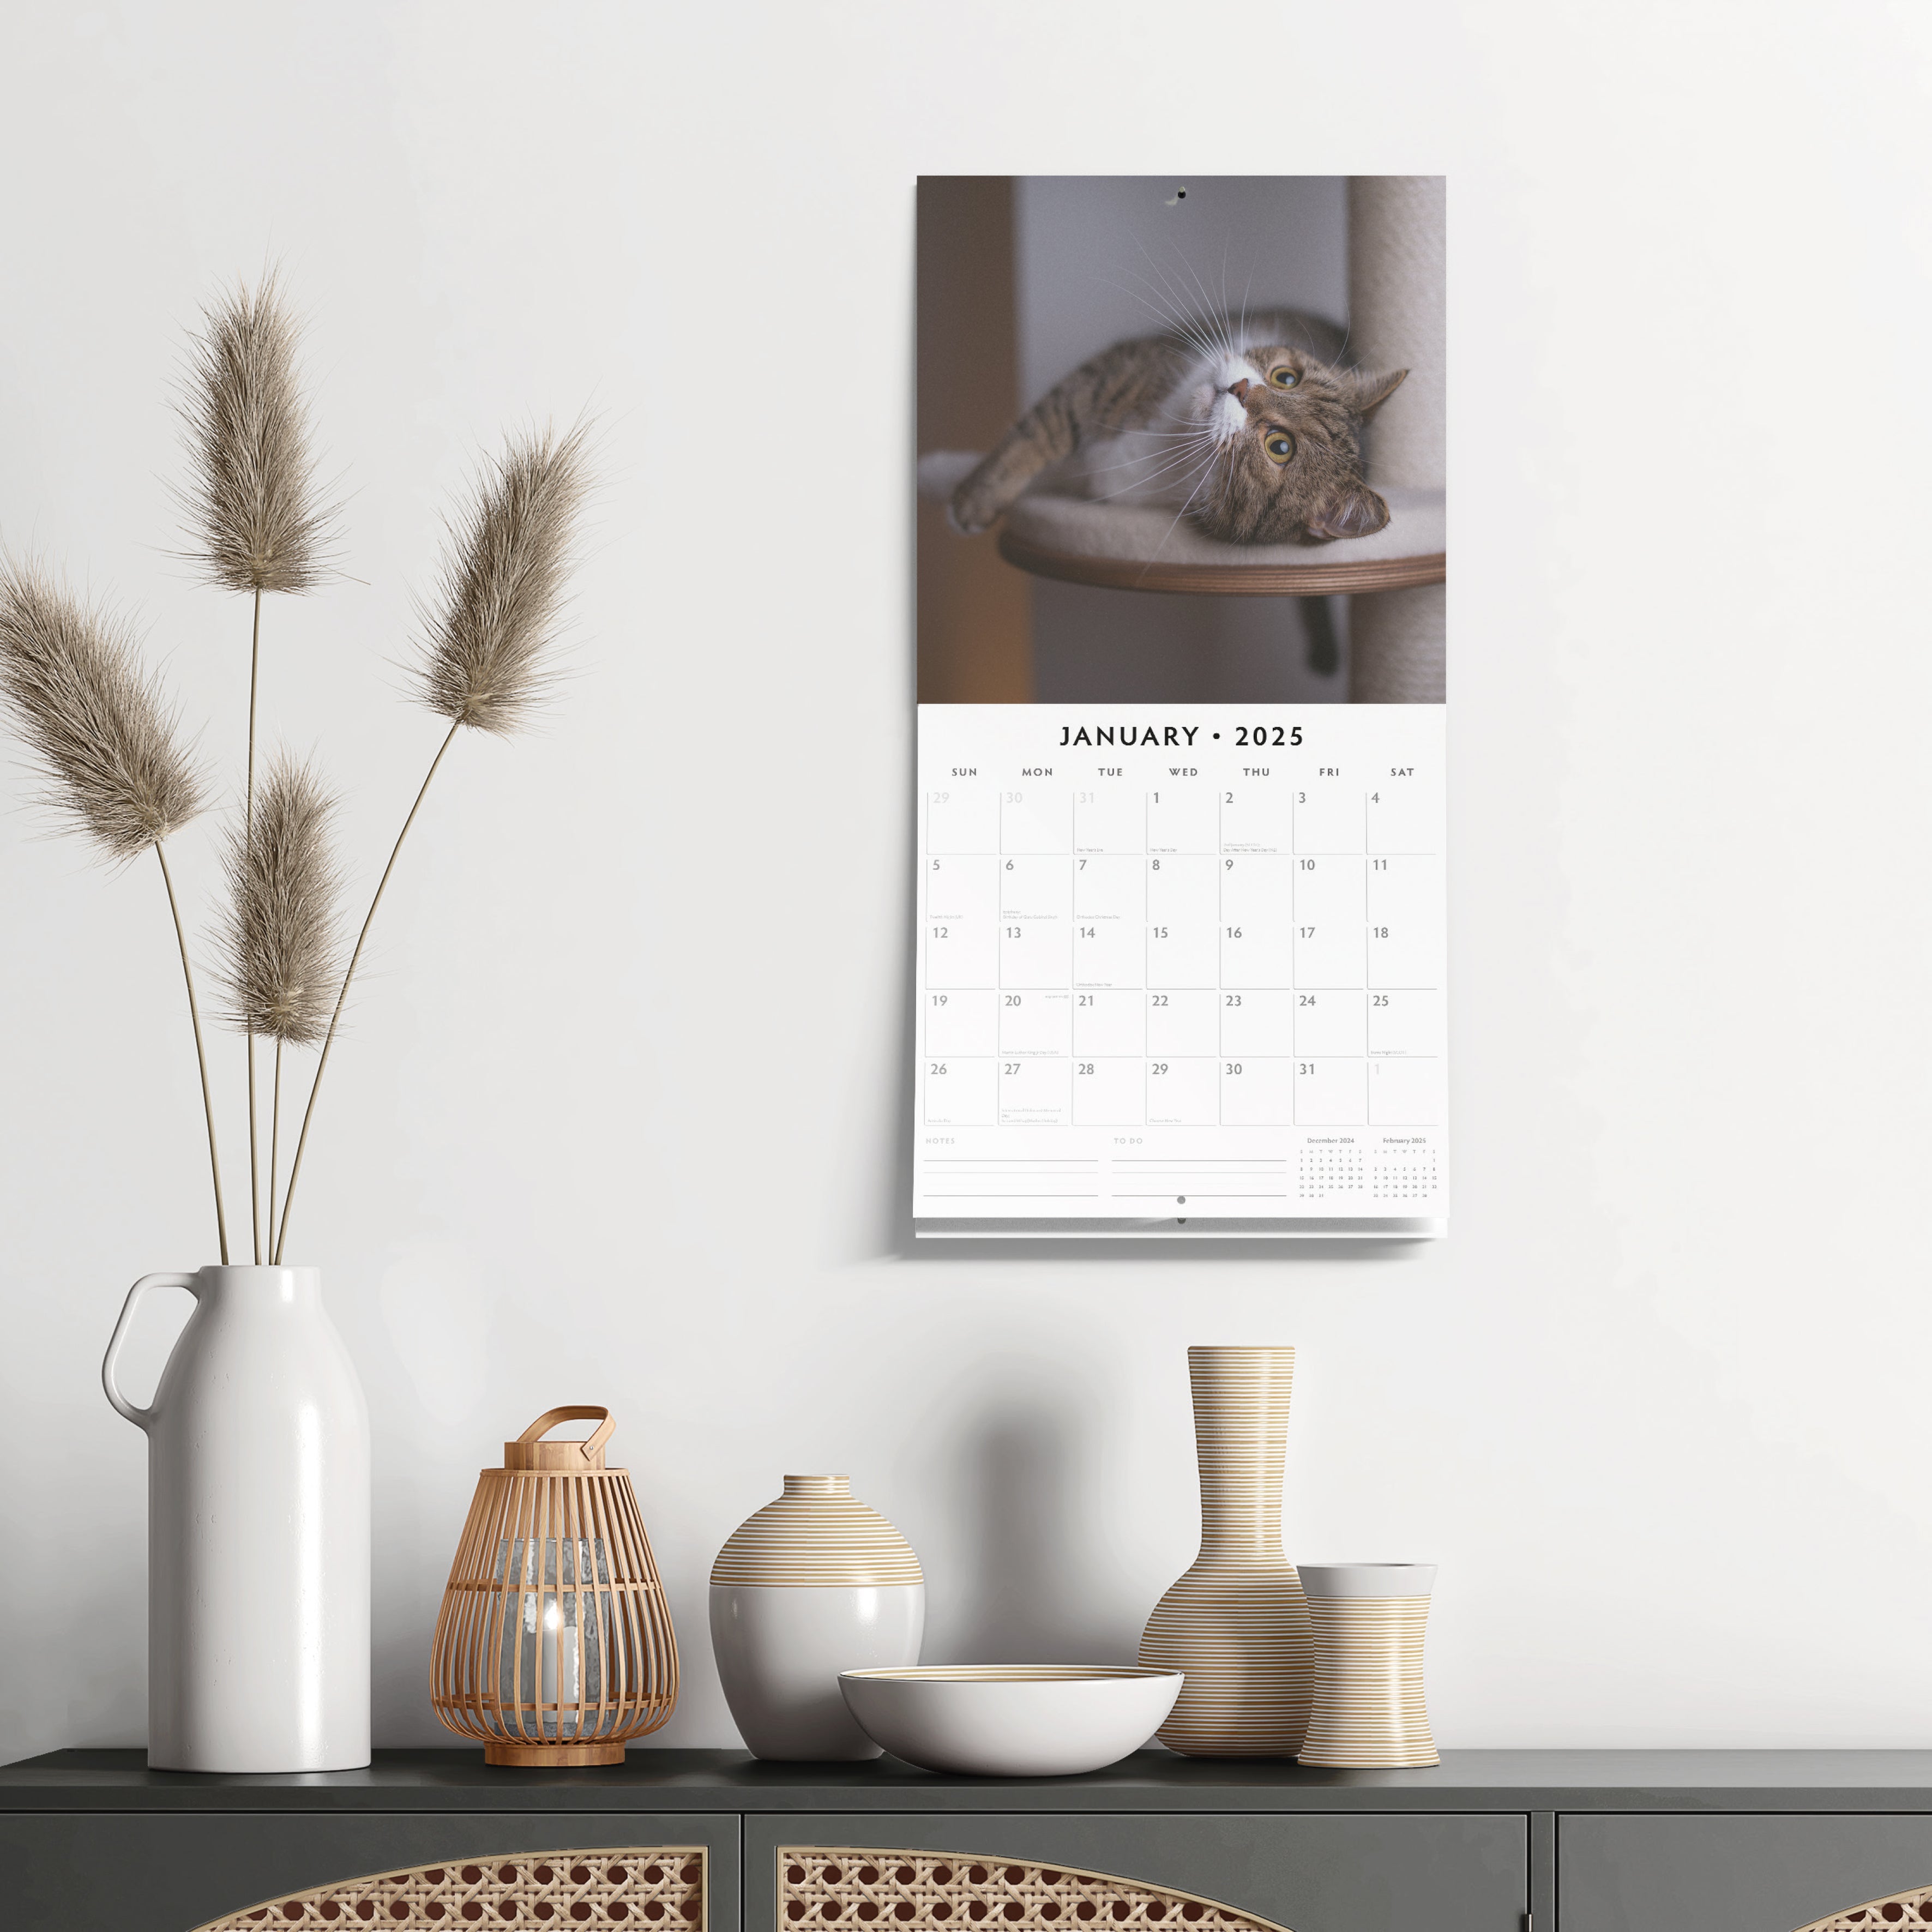 2025 British Shorthair Cats - Square Wall Calendar